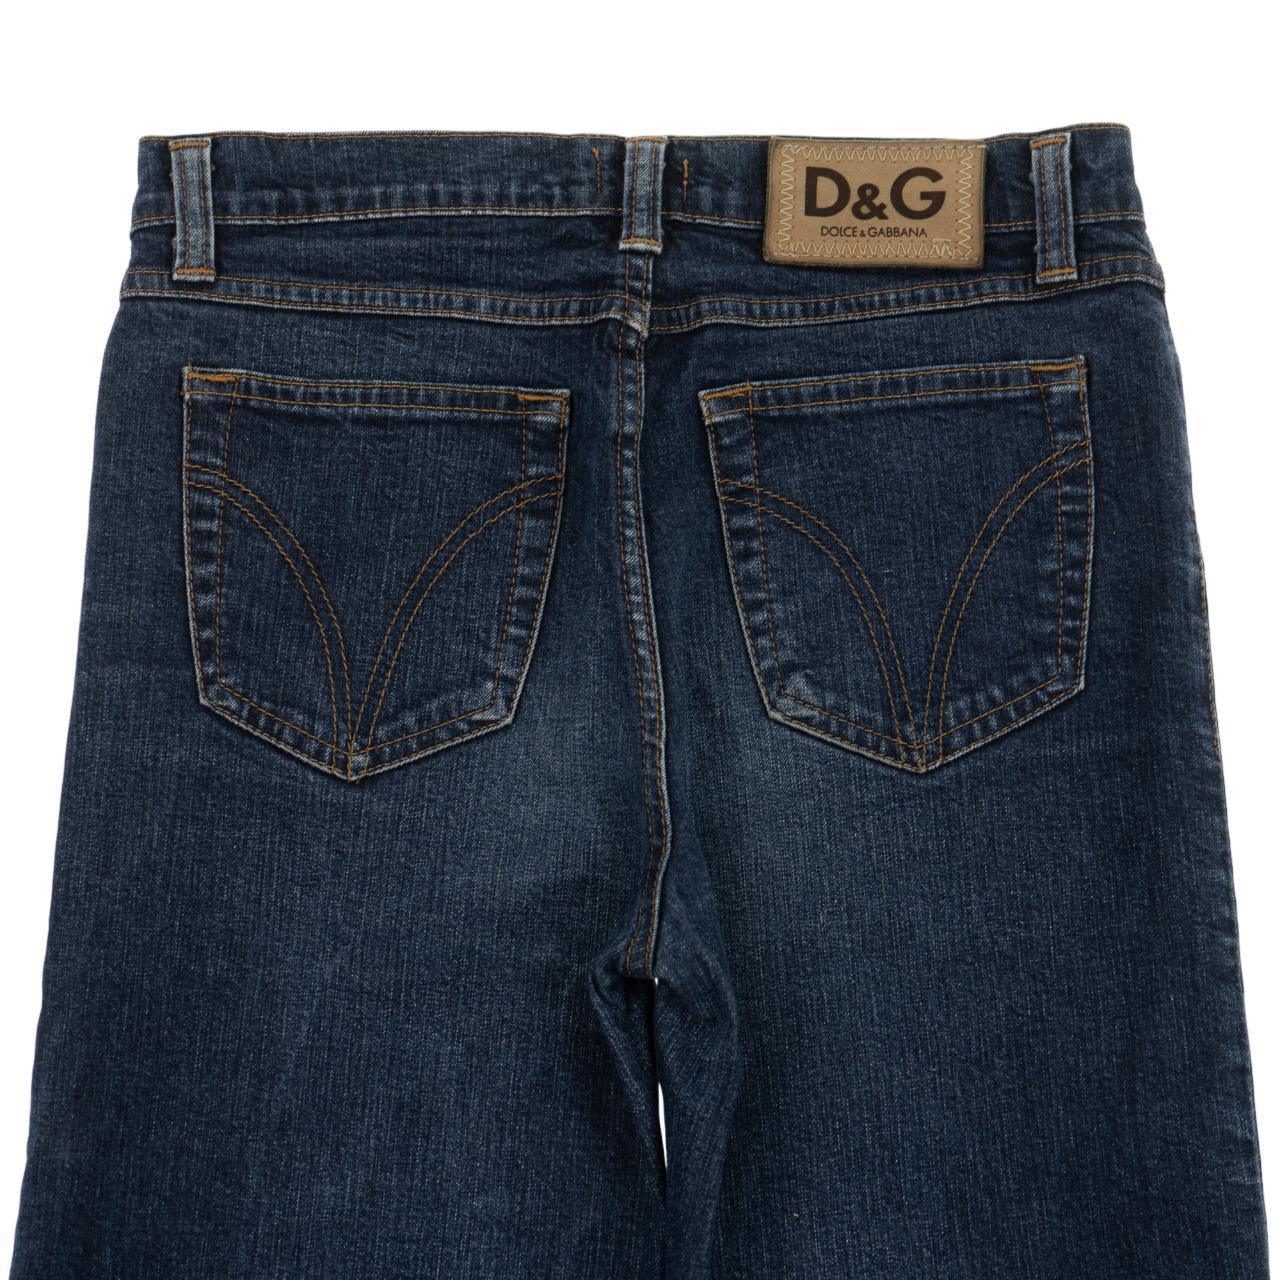 Vintage Dolce & Gabbana Denim Jeans Size W28 - Known Source